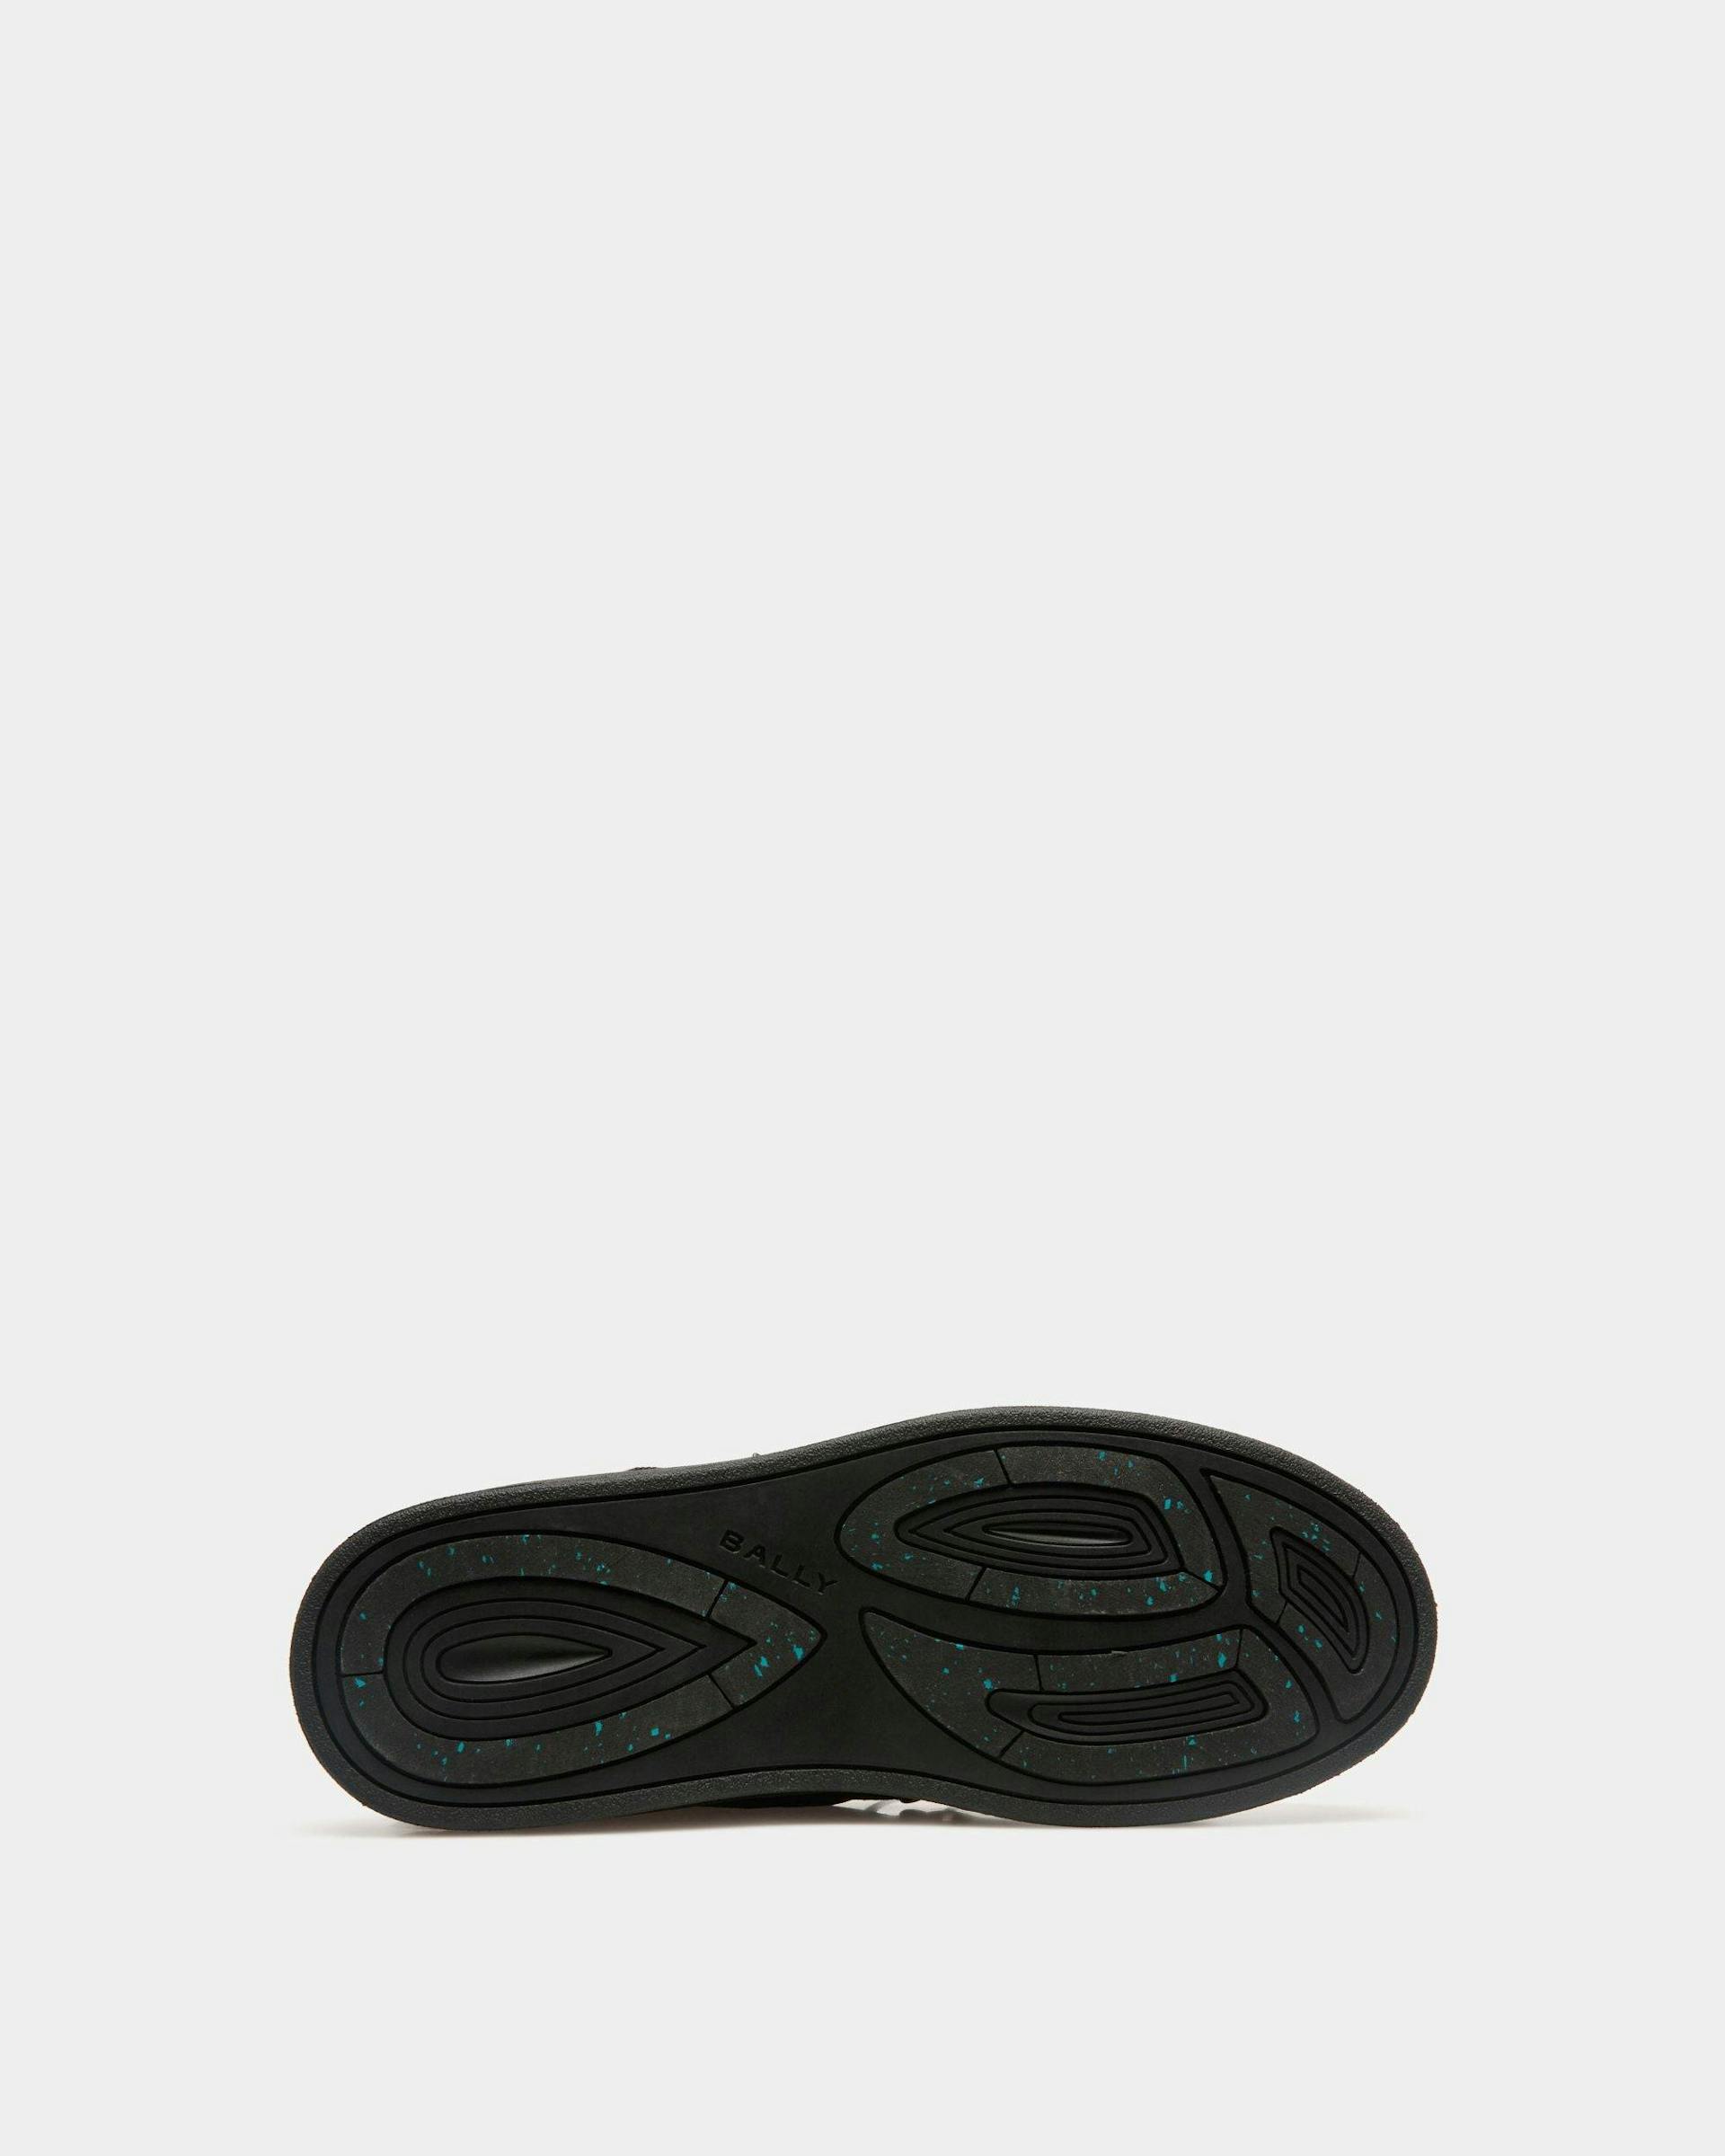 Men's Frei Lace-Up Boot In Black Nylon | Bally | Still Life Below